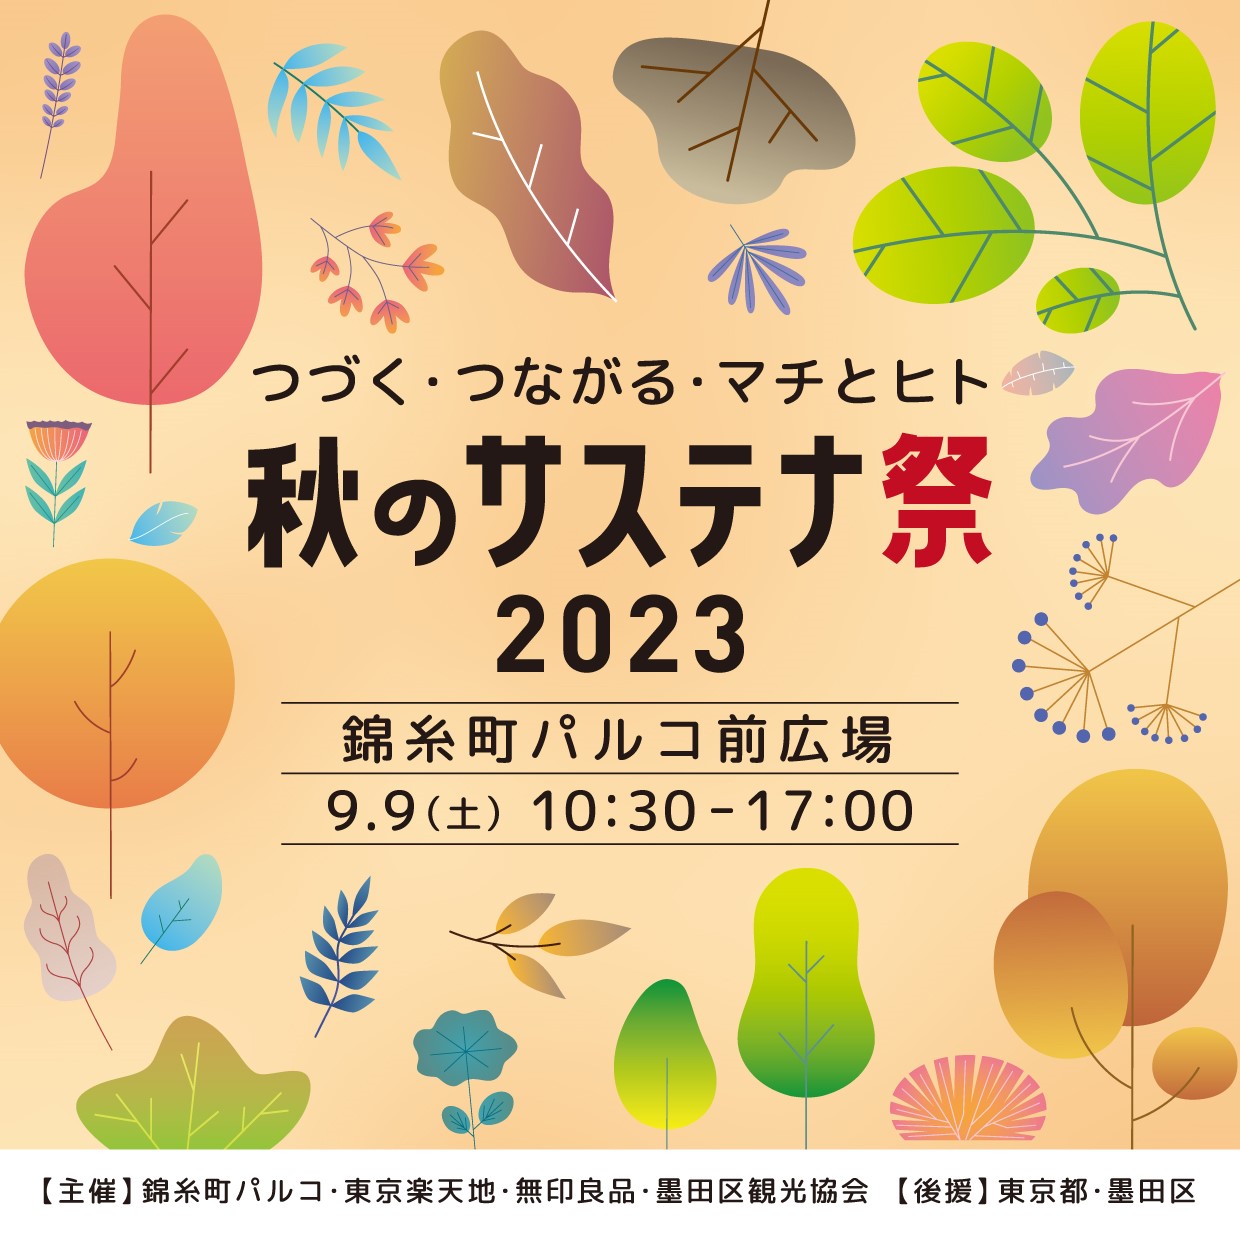 SDGsがテーマのイベントを錦糸町パルコで実施！今年は東京都も後援に。